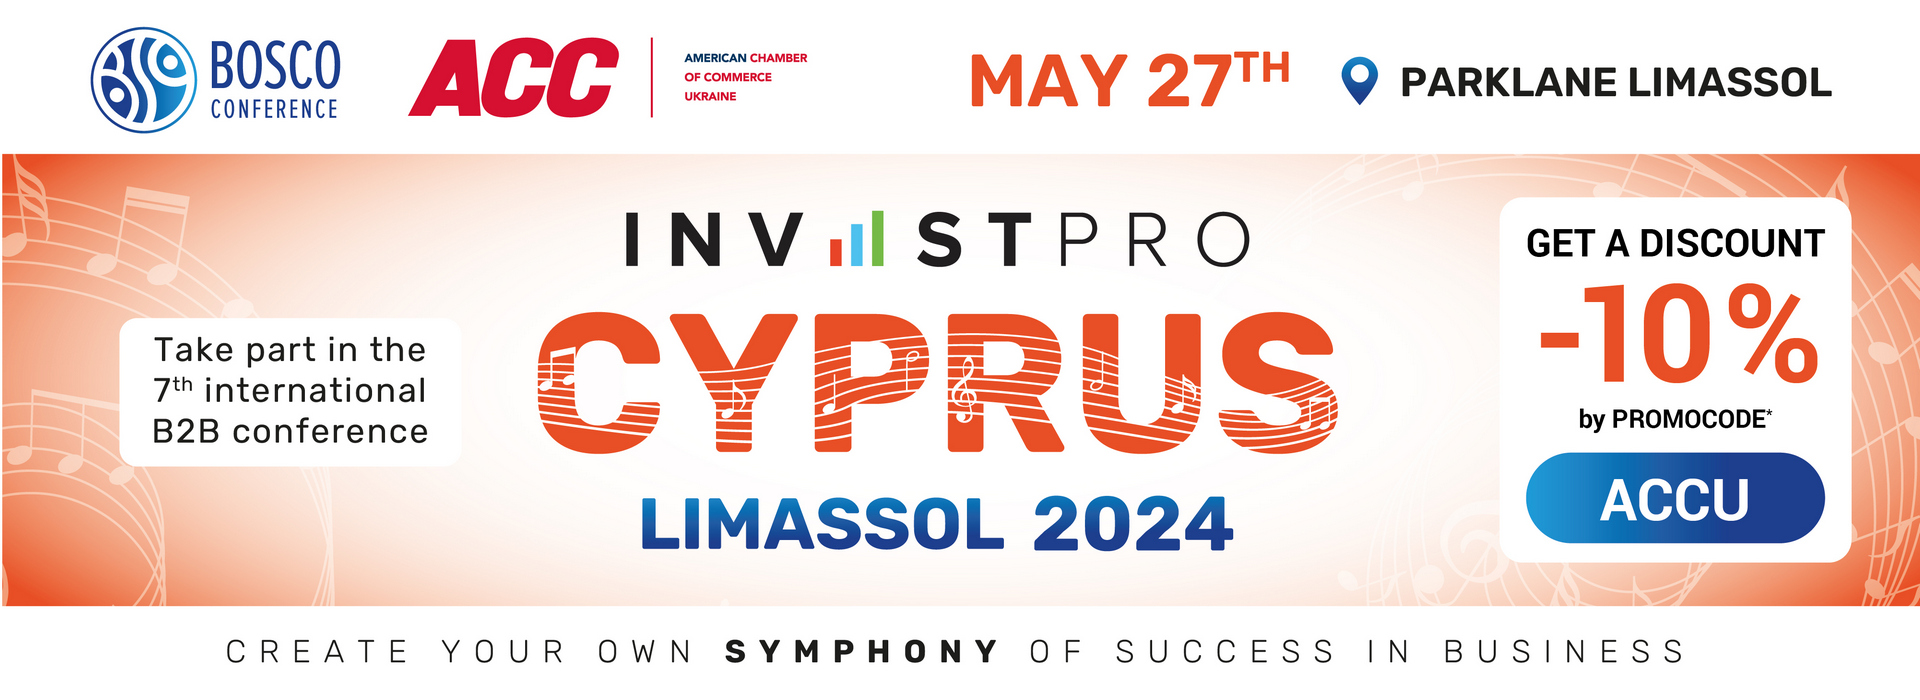 Annual B2B InvestPro Cyprus Limassol 2024 Conference